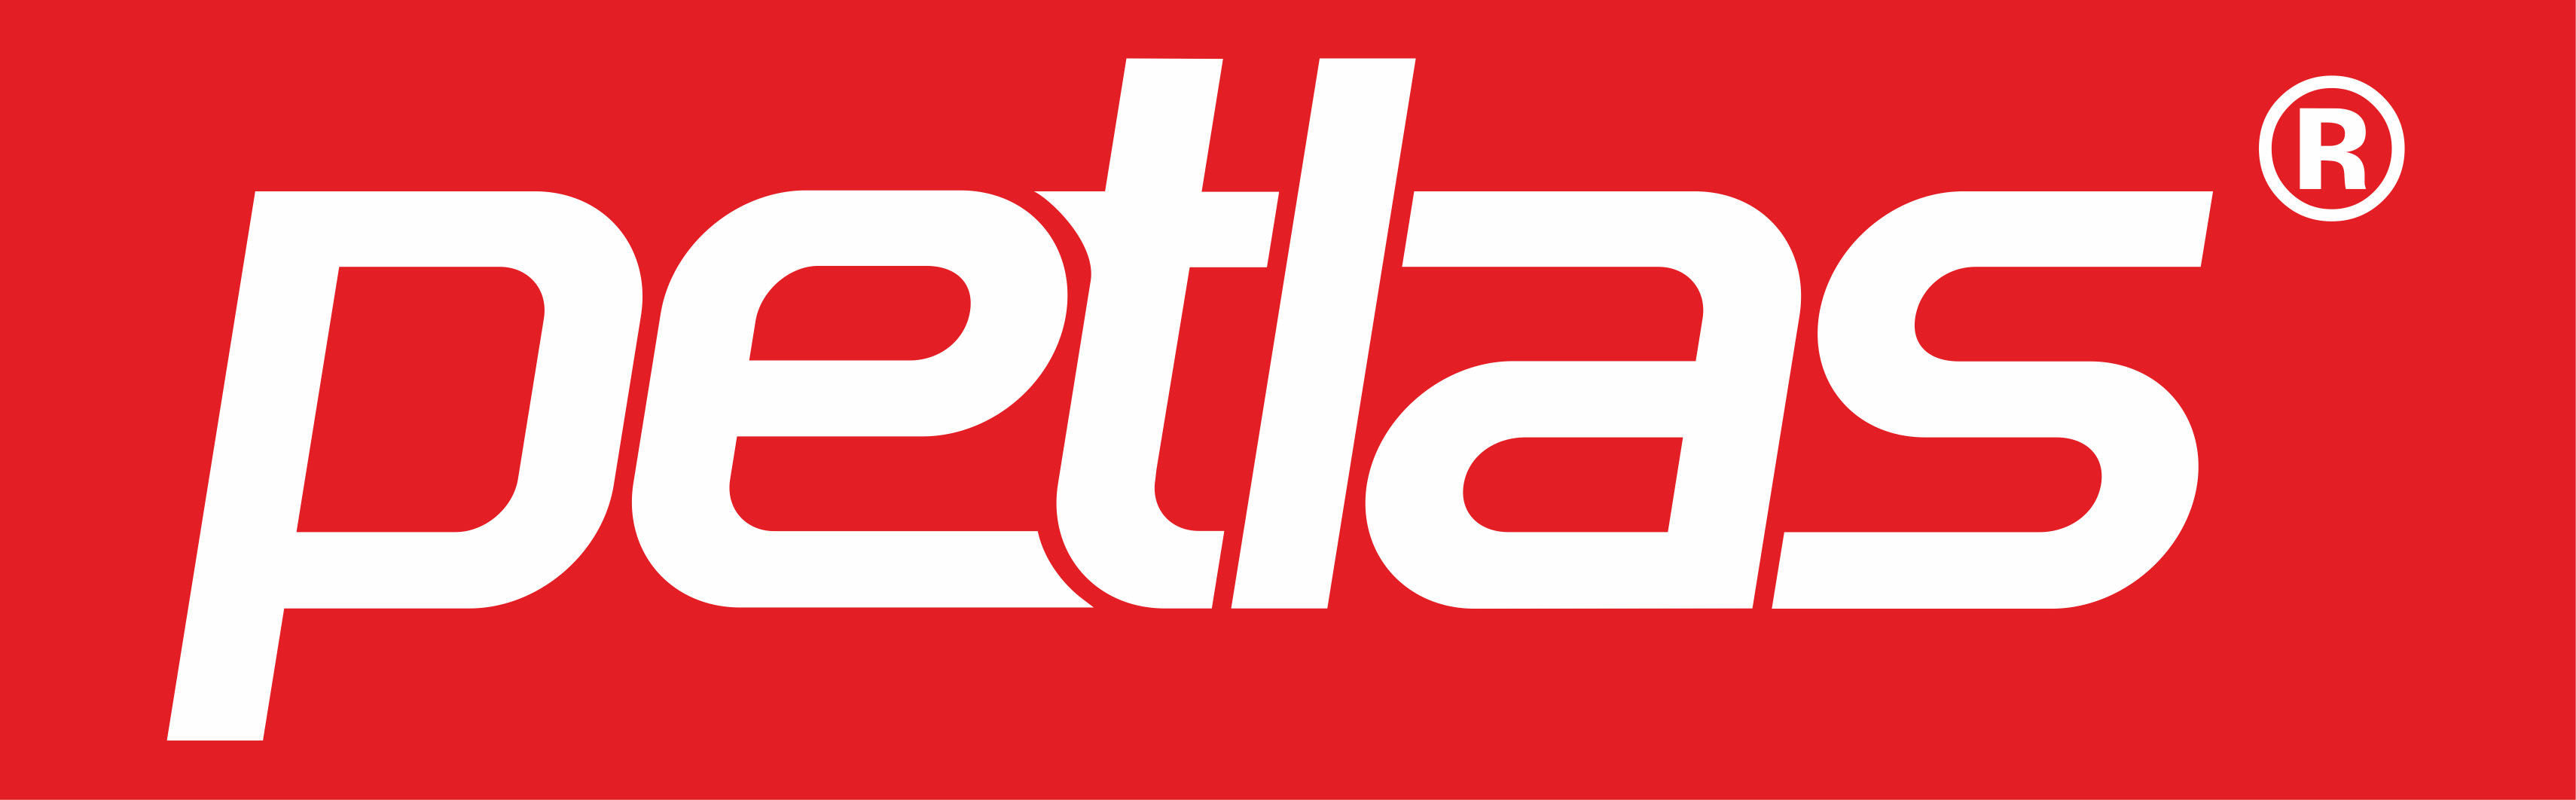 Логотип Petlas